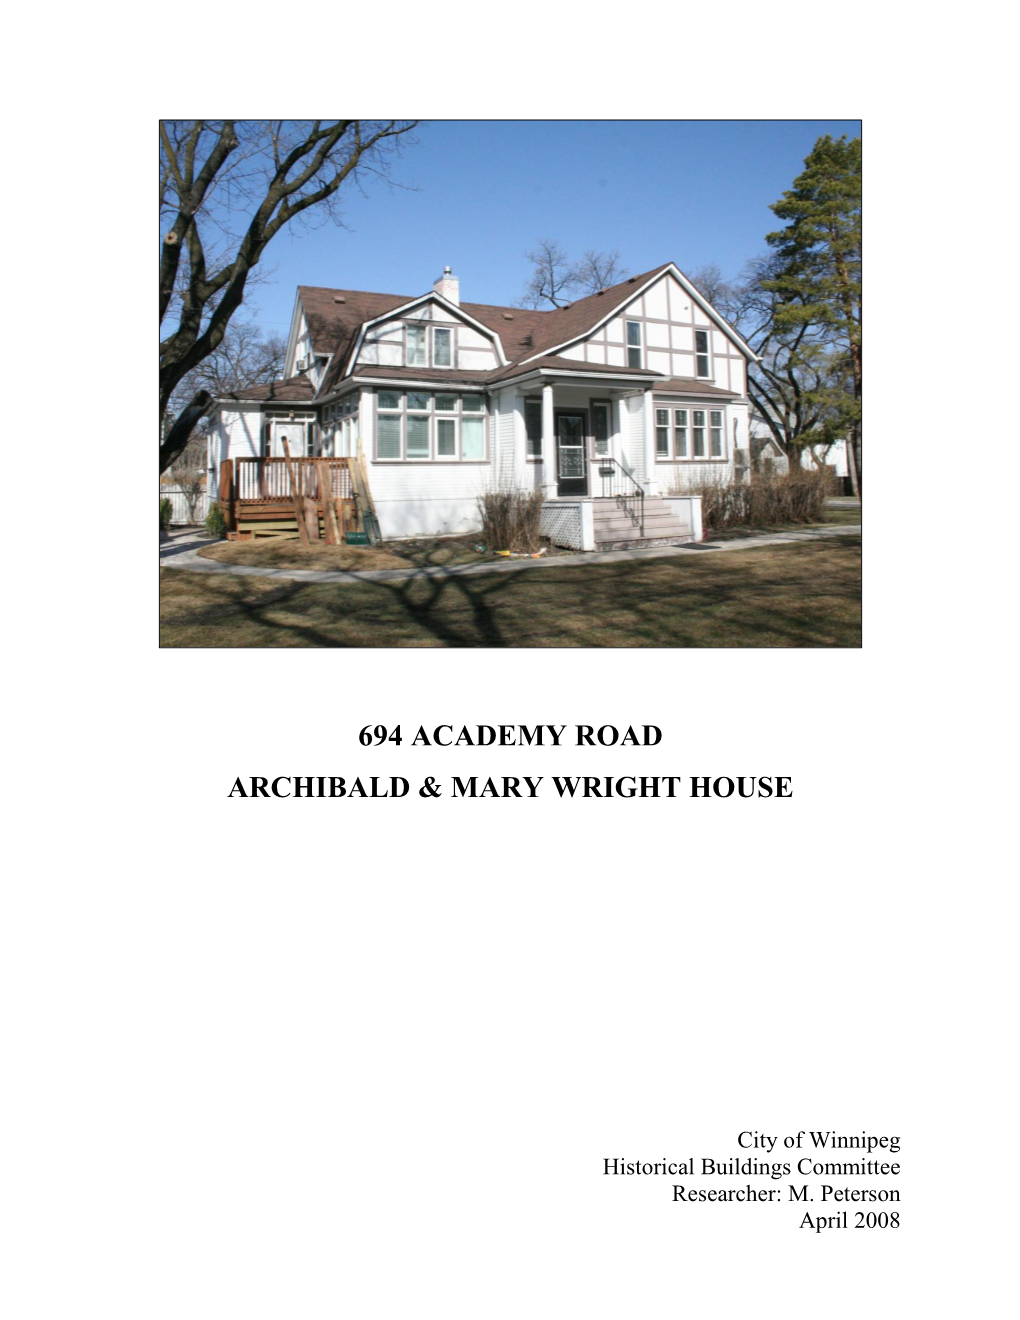 694 Academy Road Archibald & Mary Wright House